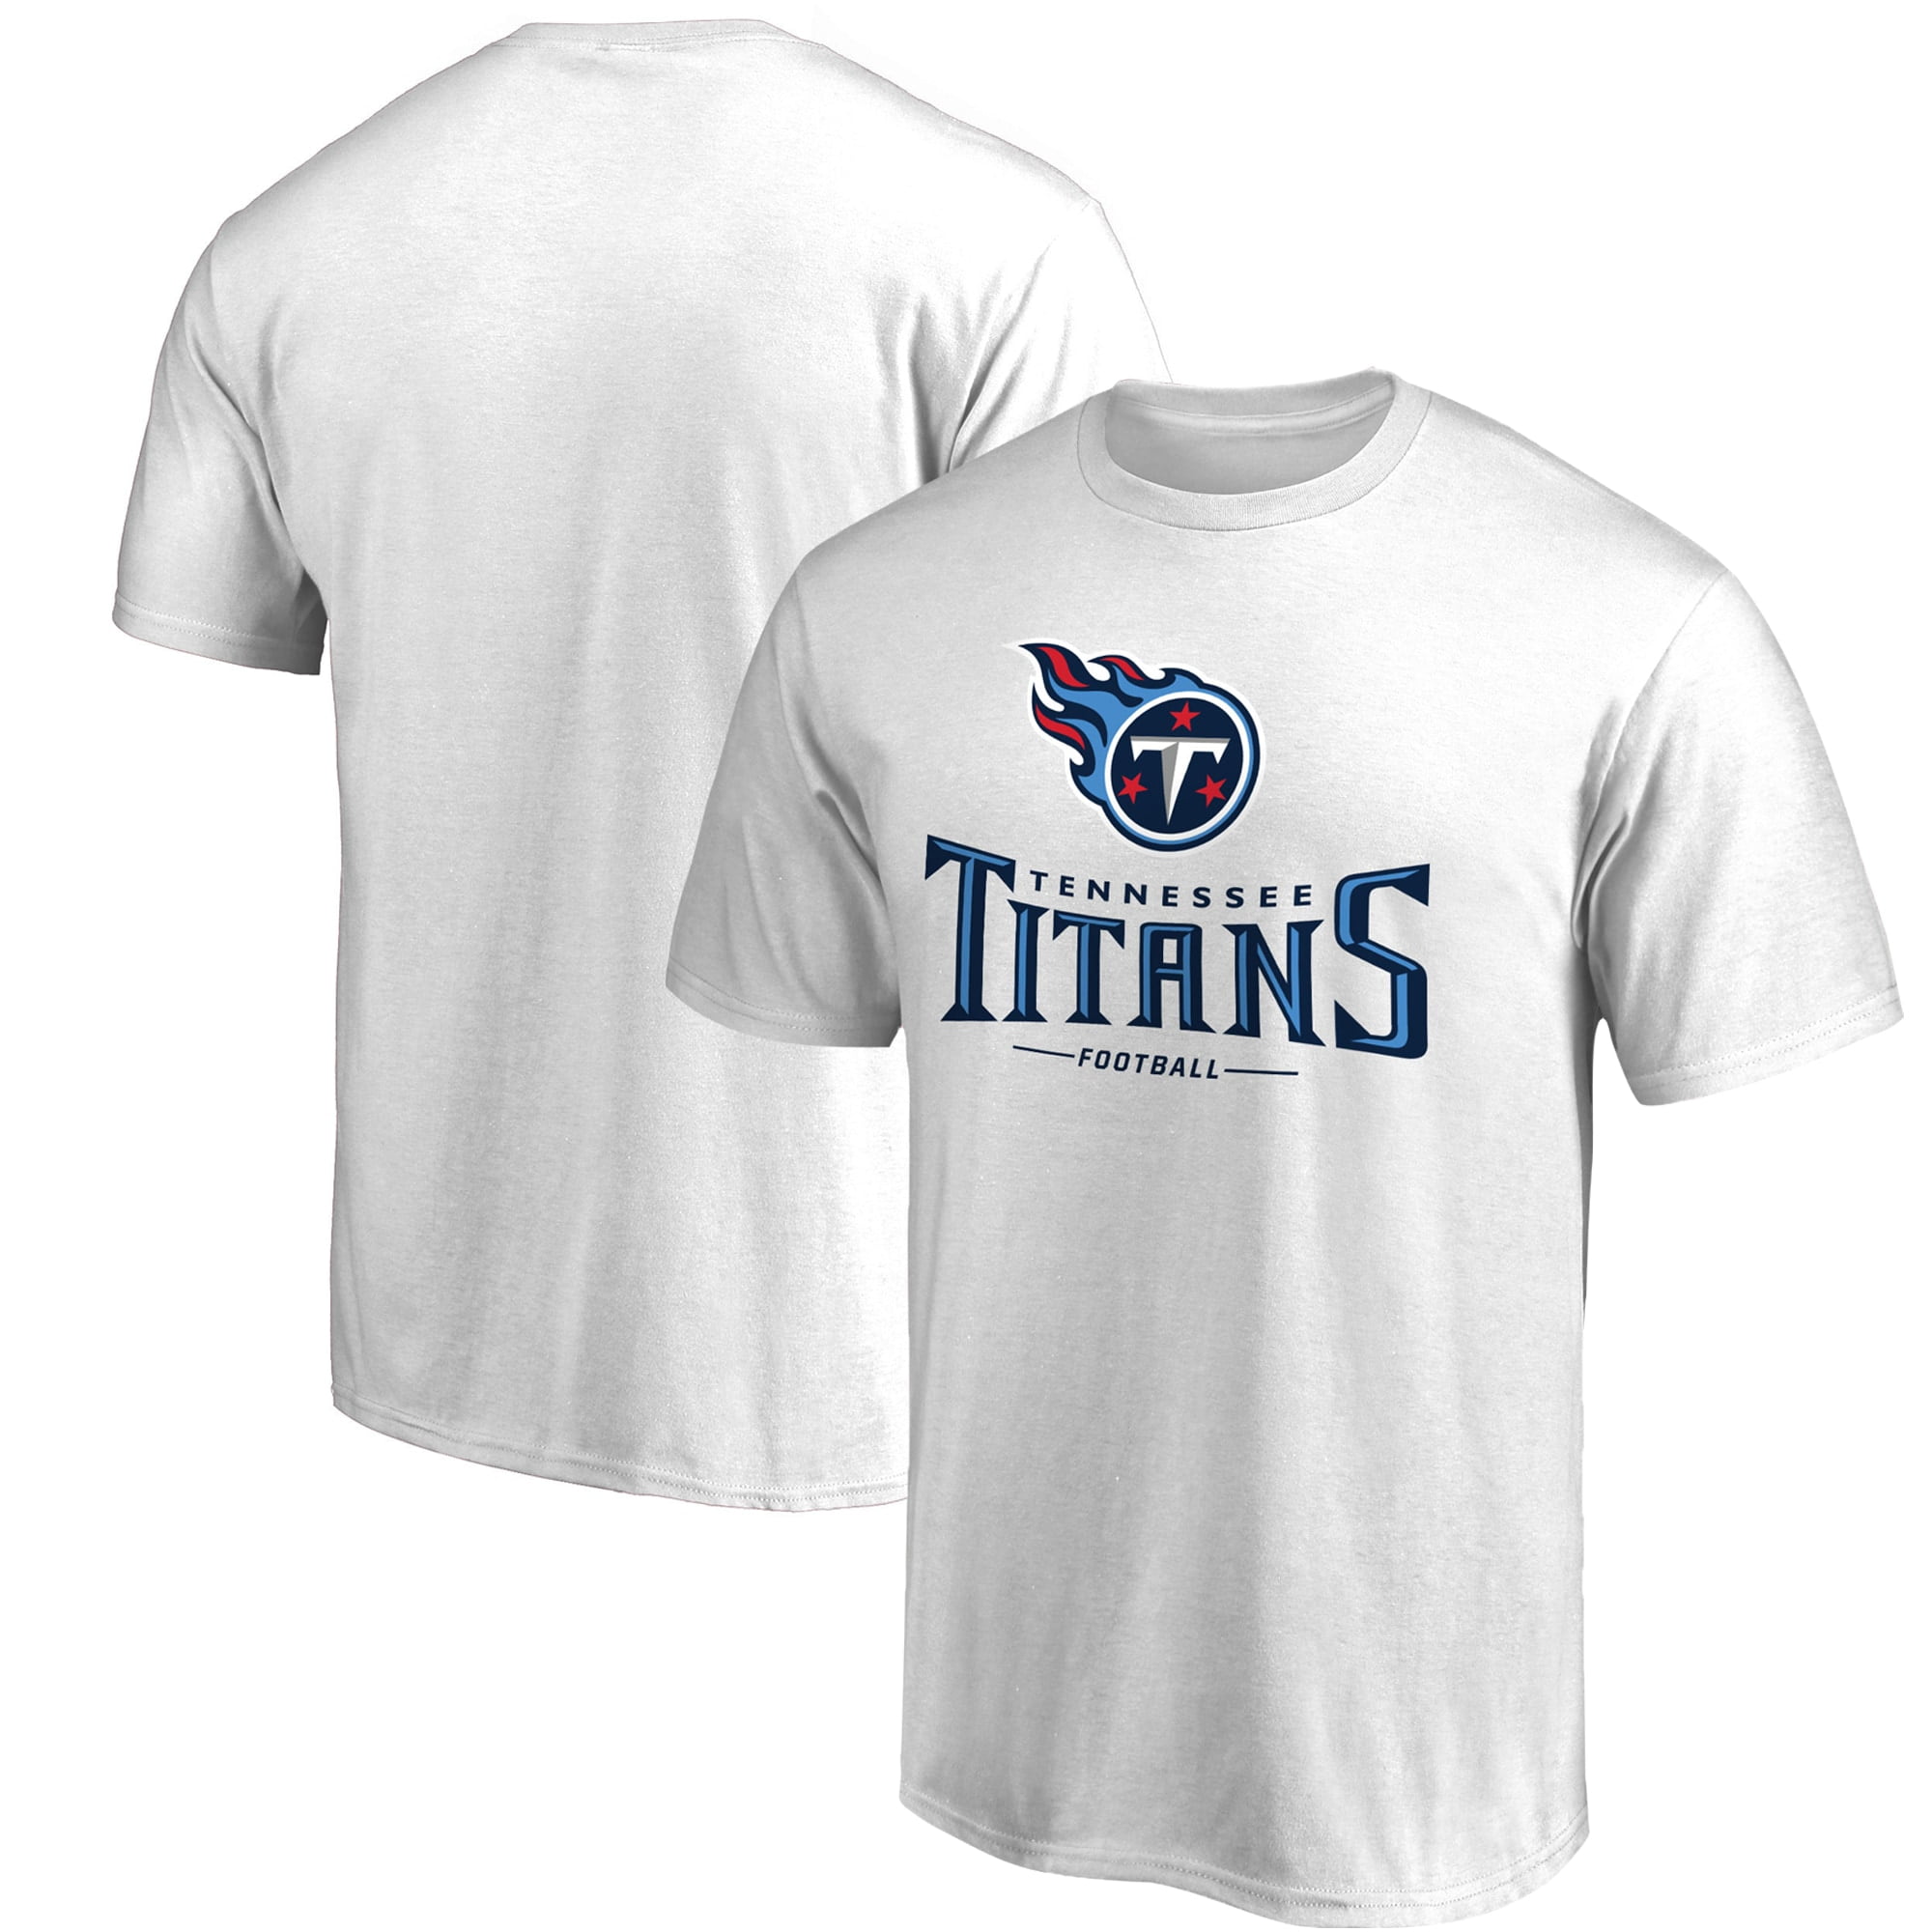 titans football shirt